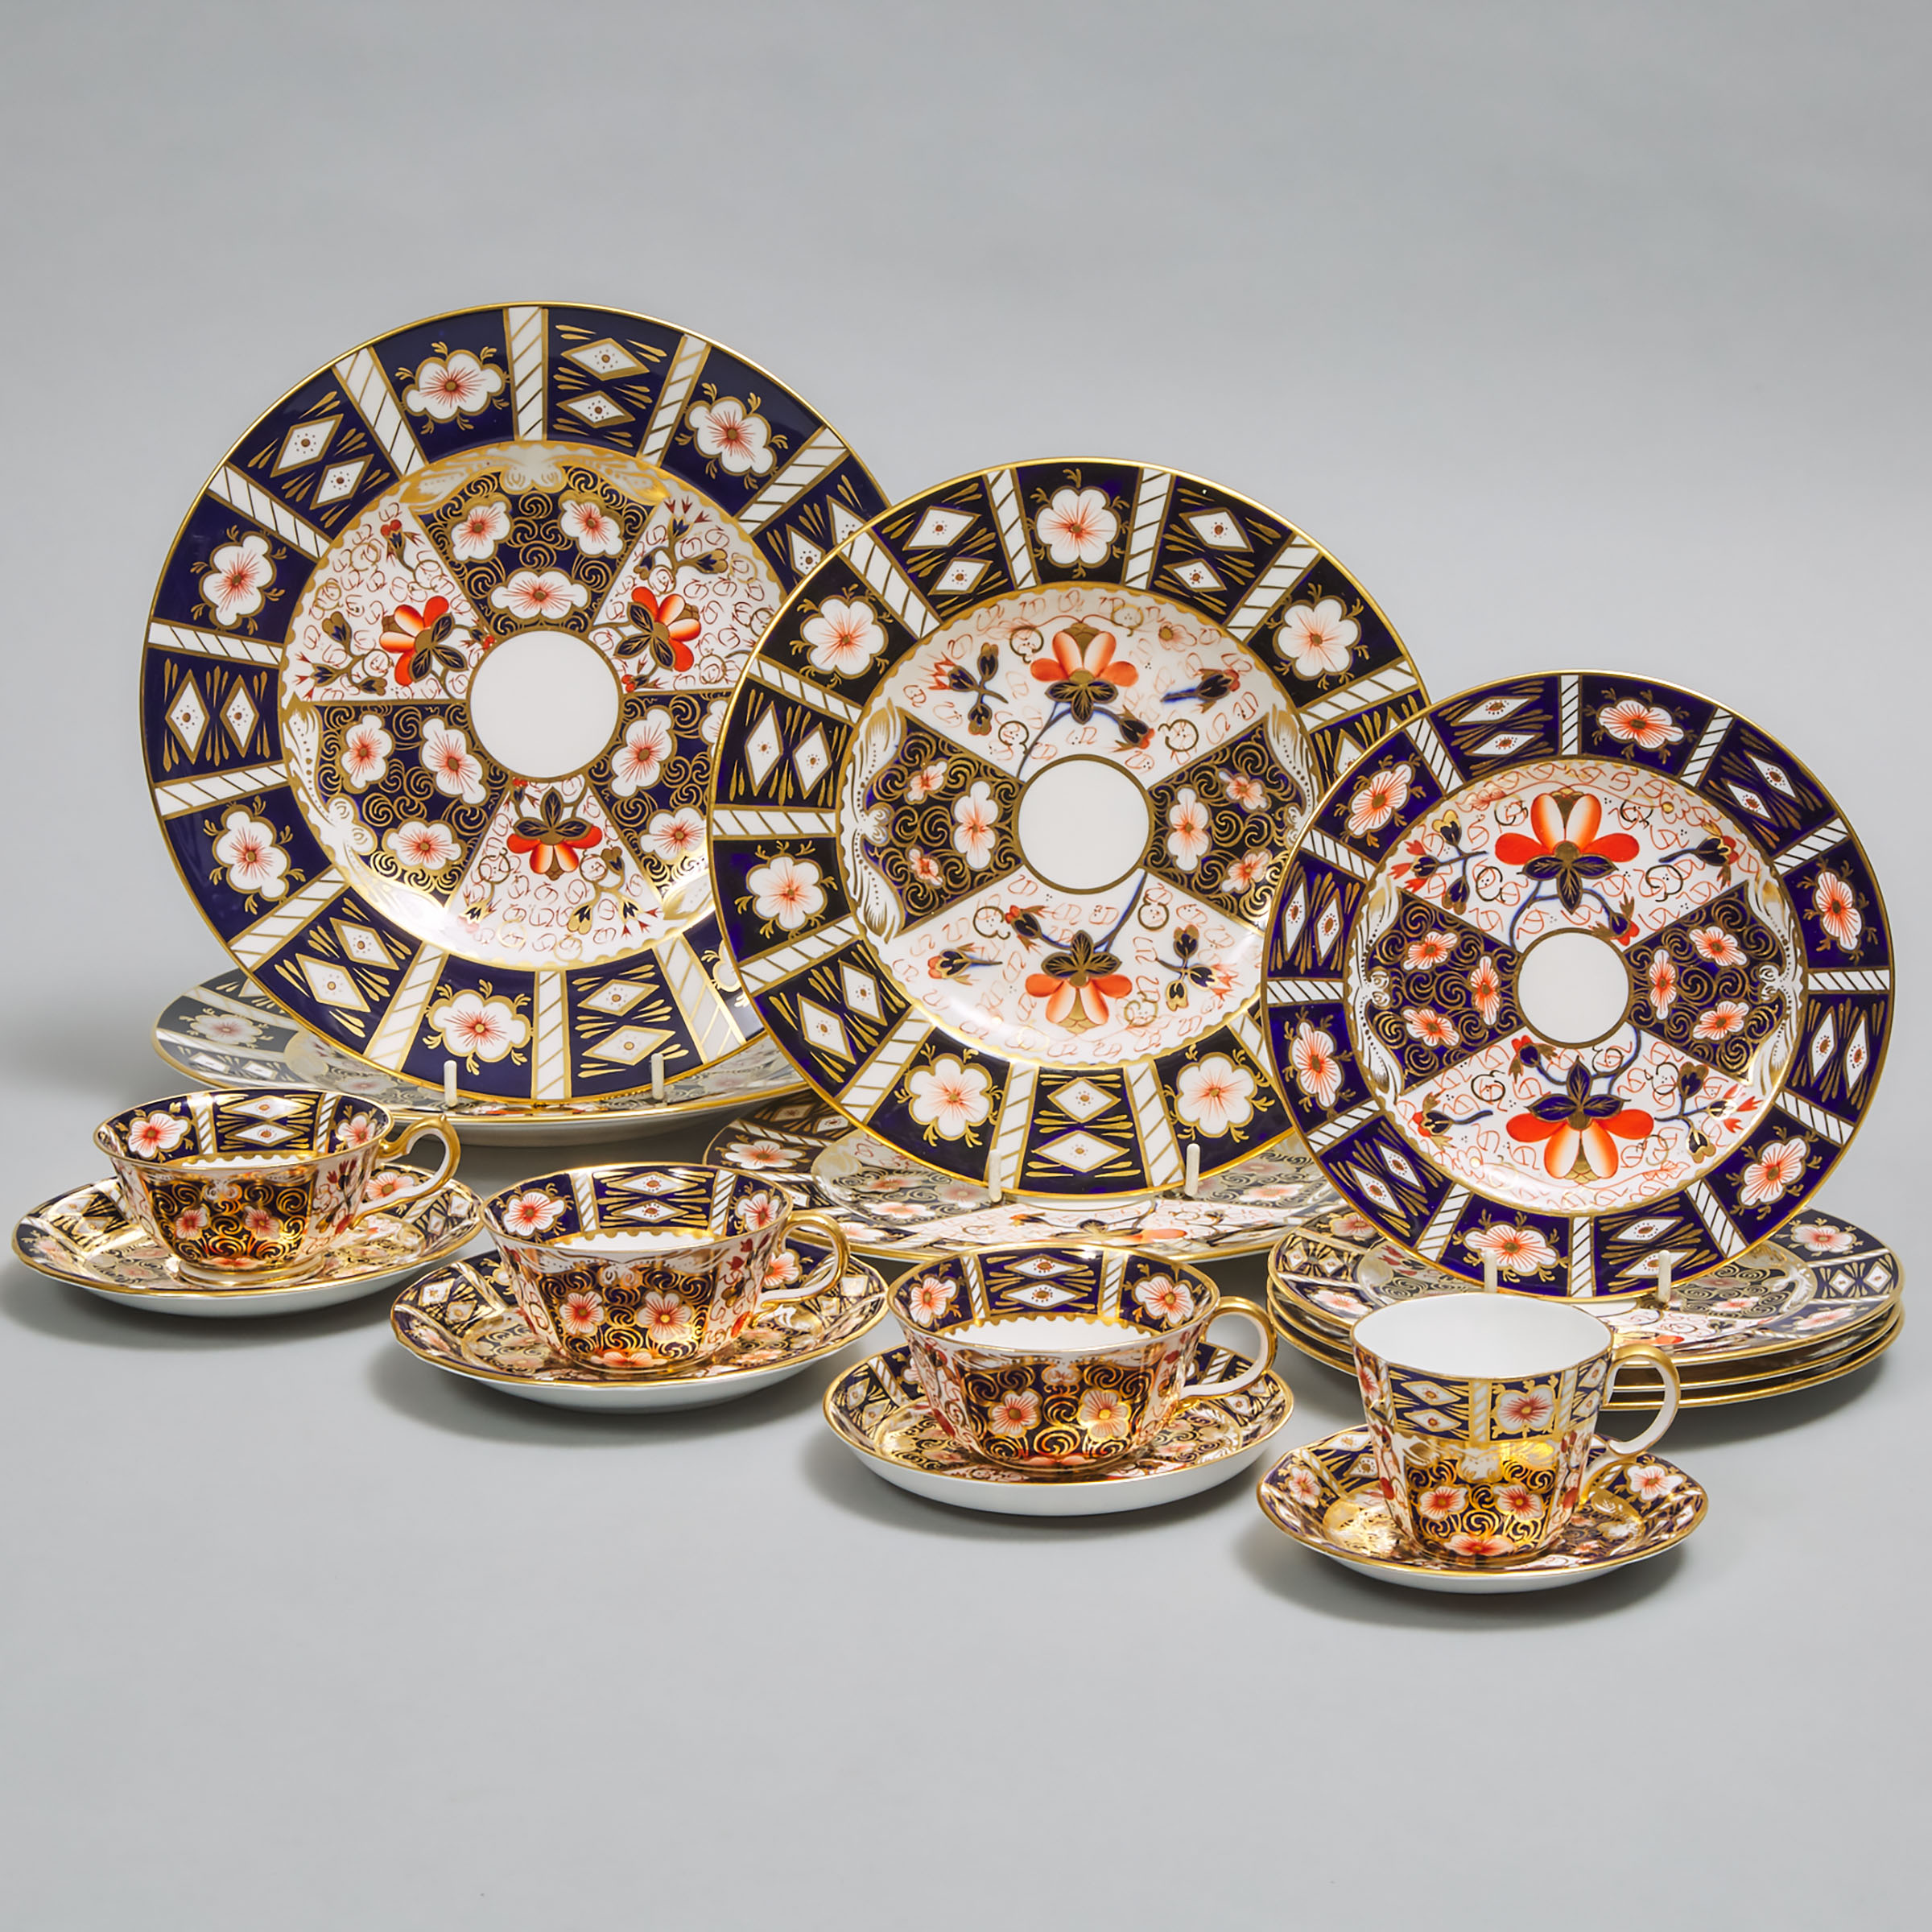 Group of Royal Crown Derby 'Imari' (2451) Pattern Tablewares, 20th century